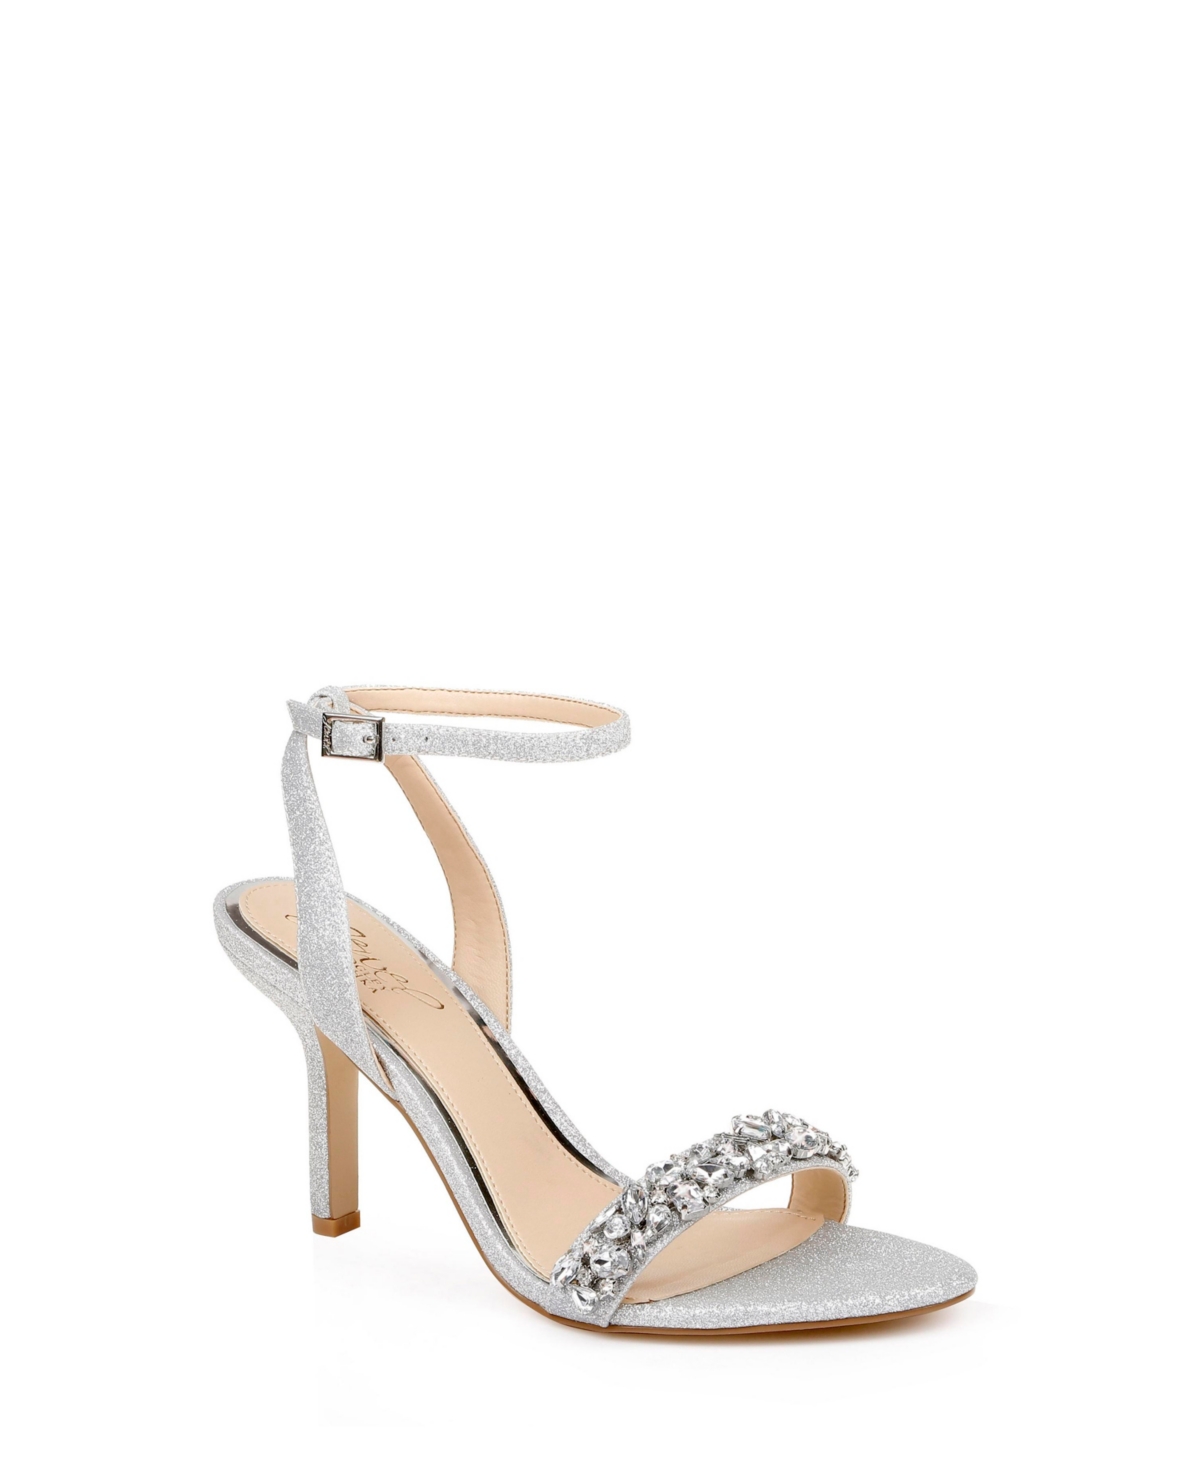 Women's Ojai Embellished Evening Sandals - Silver Glitter